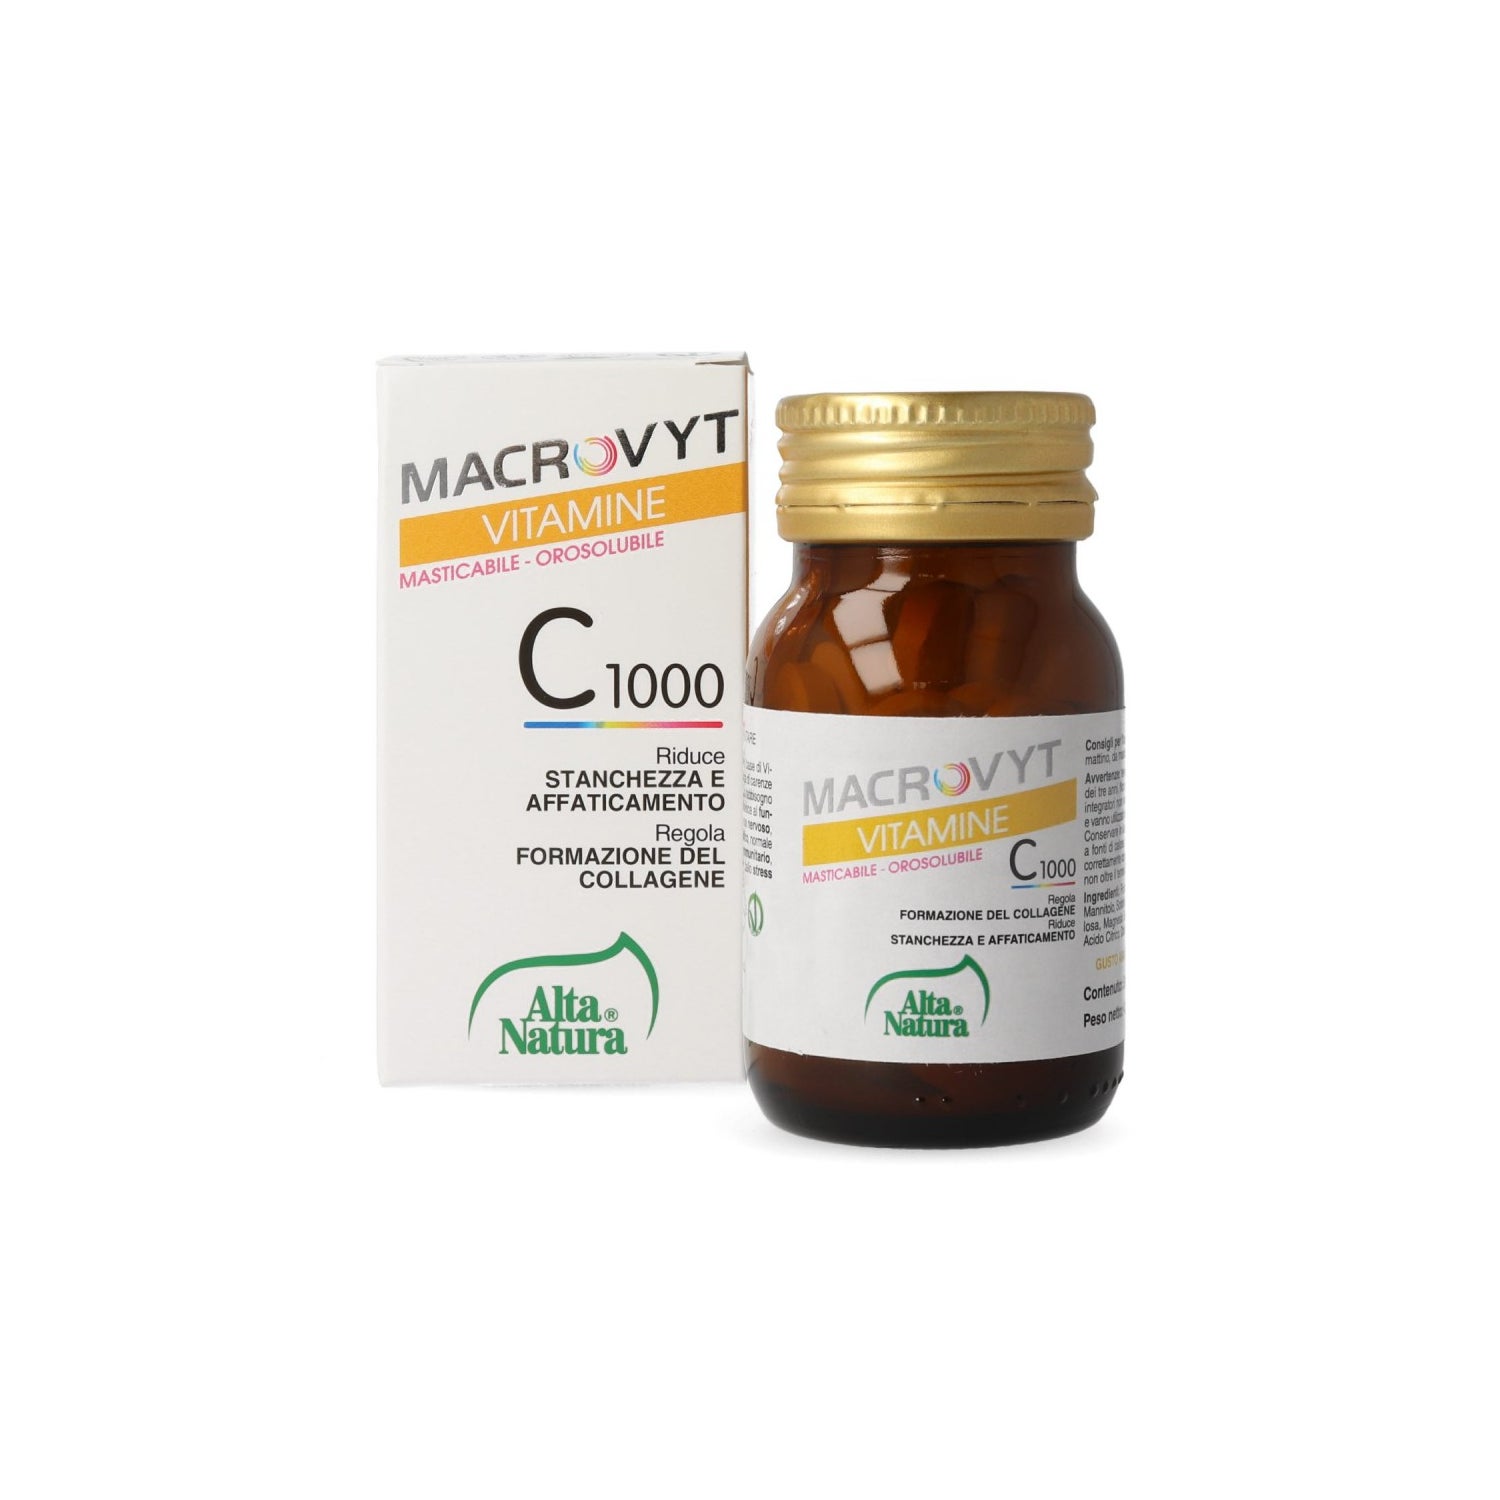 Alta Natura Macrovyt Vitaminas C 1000 30comp | PromoFarma